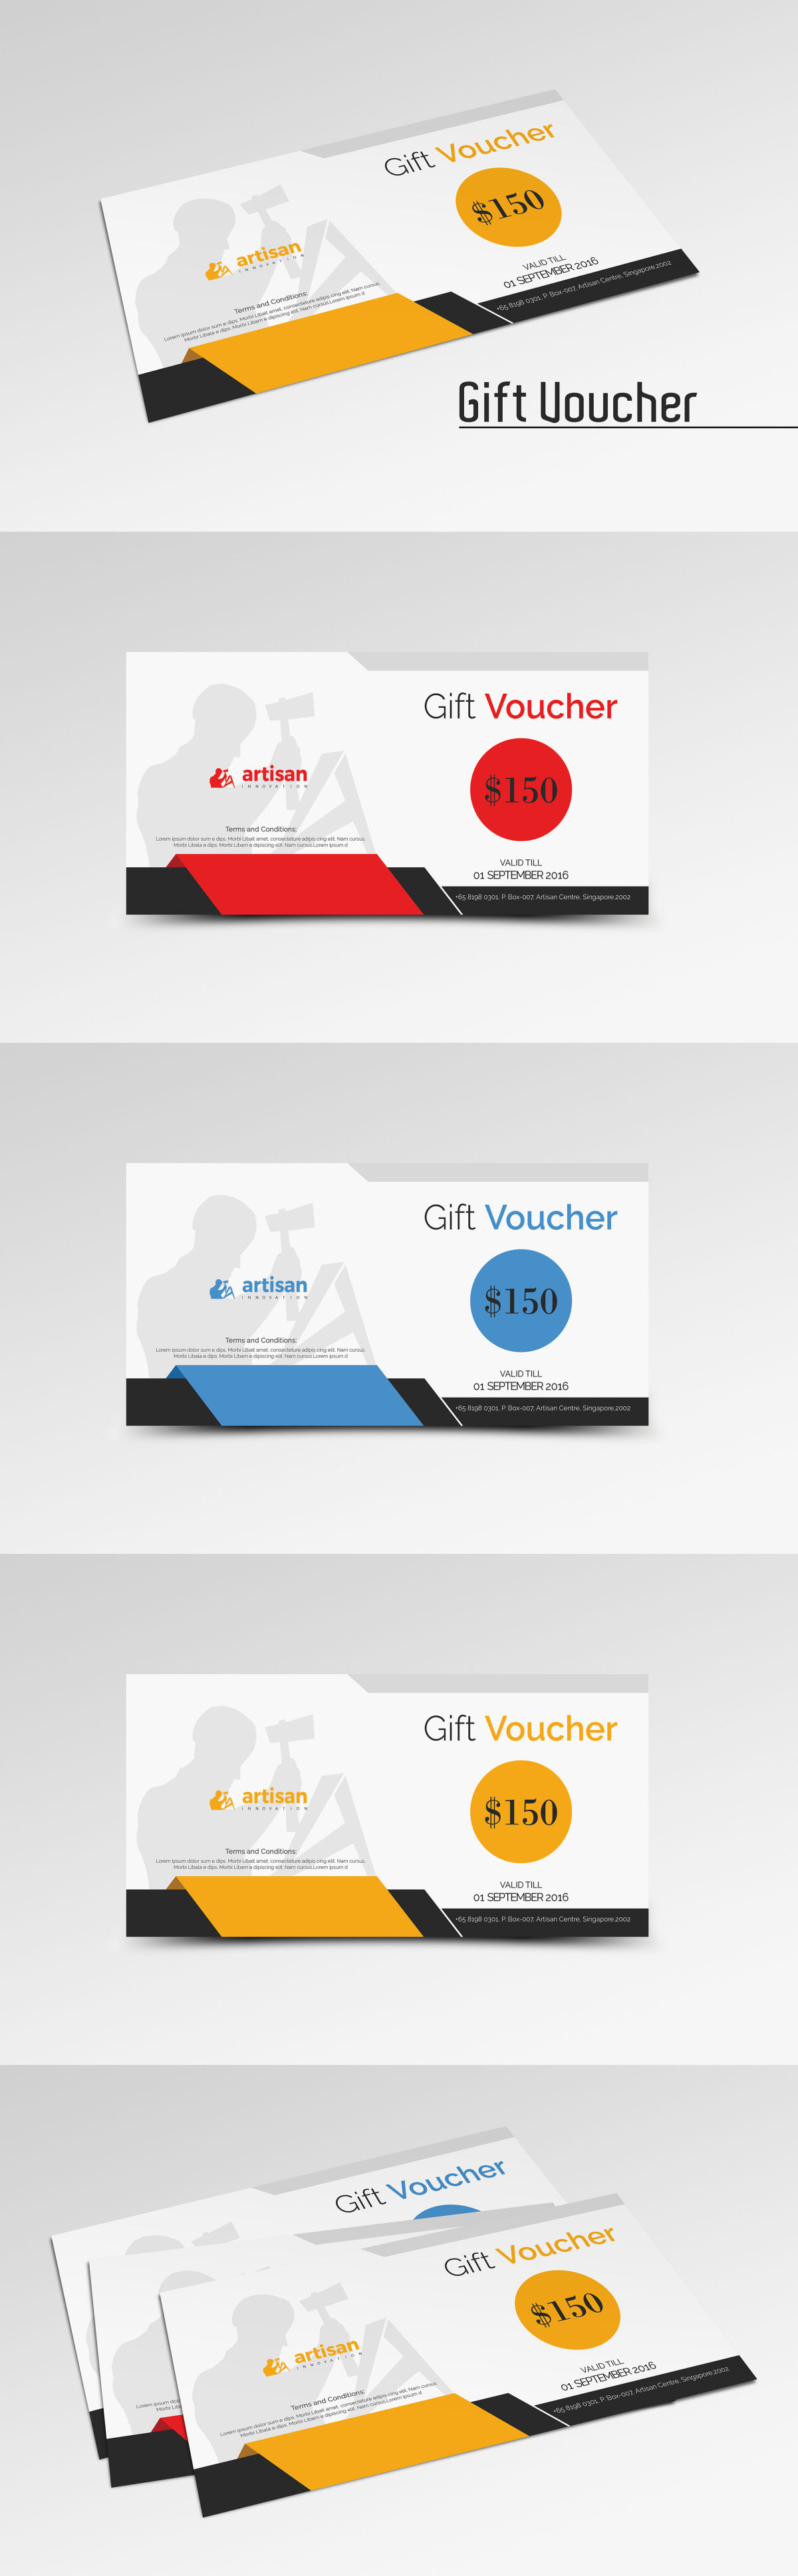 Gift Voucher Template Ai, Eps, Psd | Gift Voucher Templates Throughout Gift Card Template Illustrator